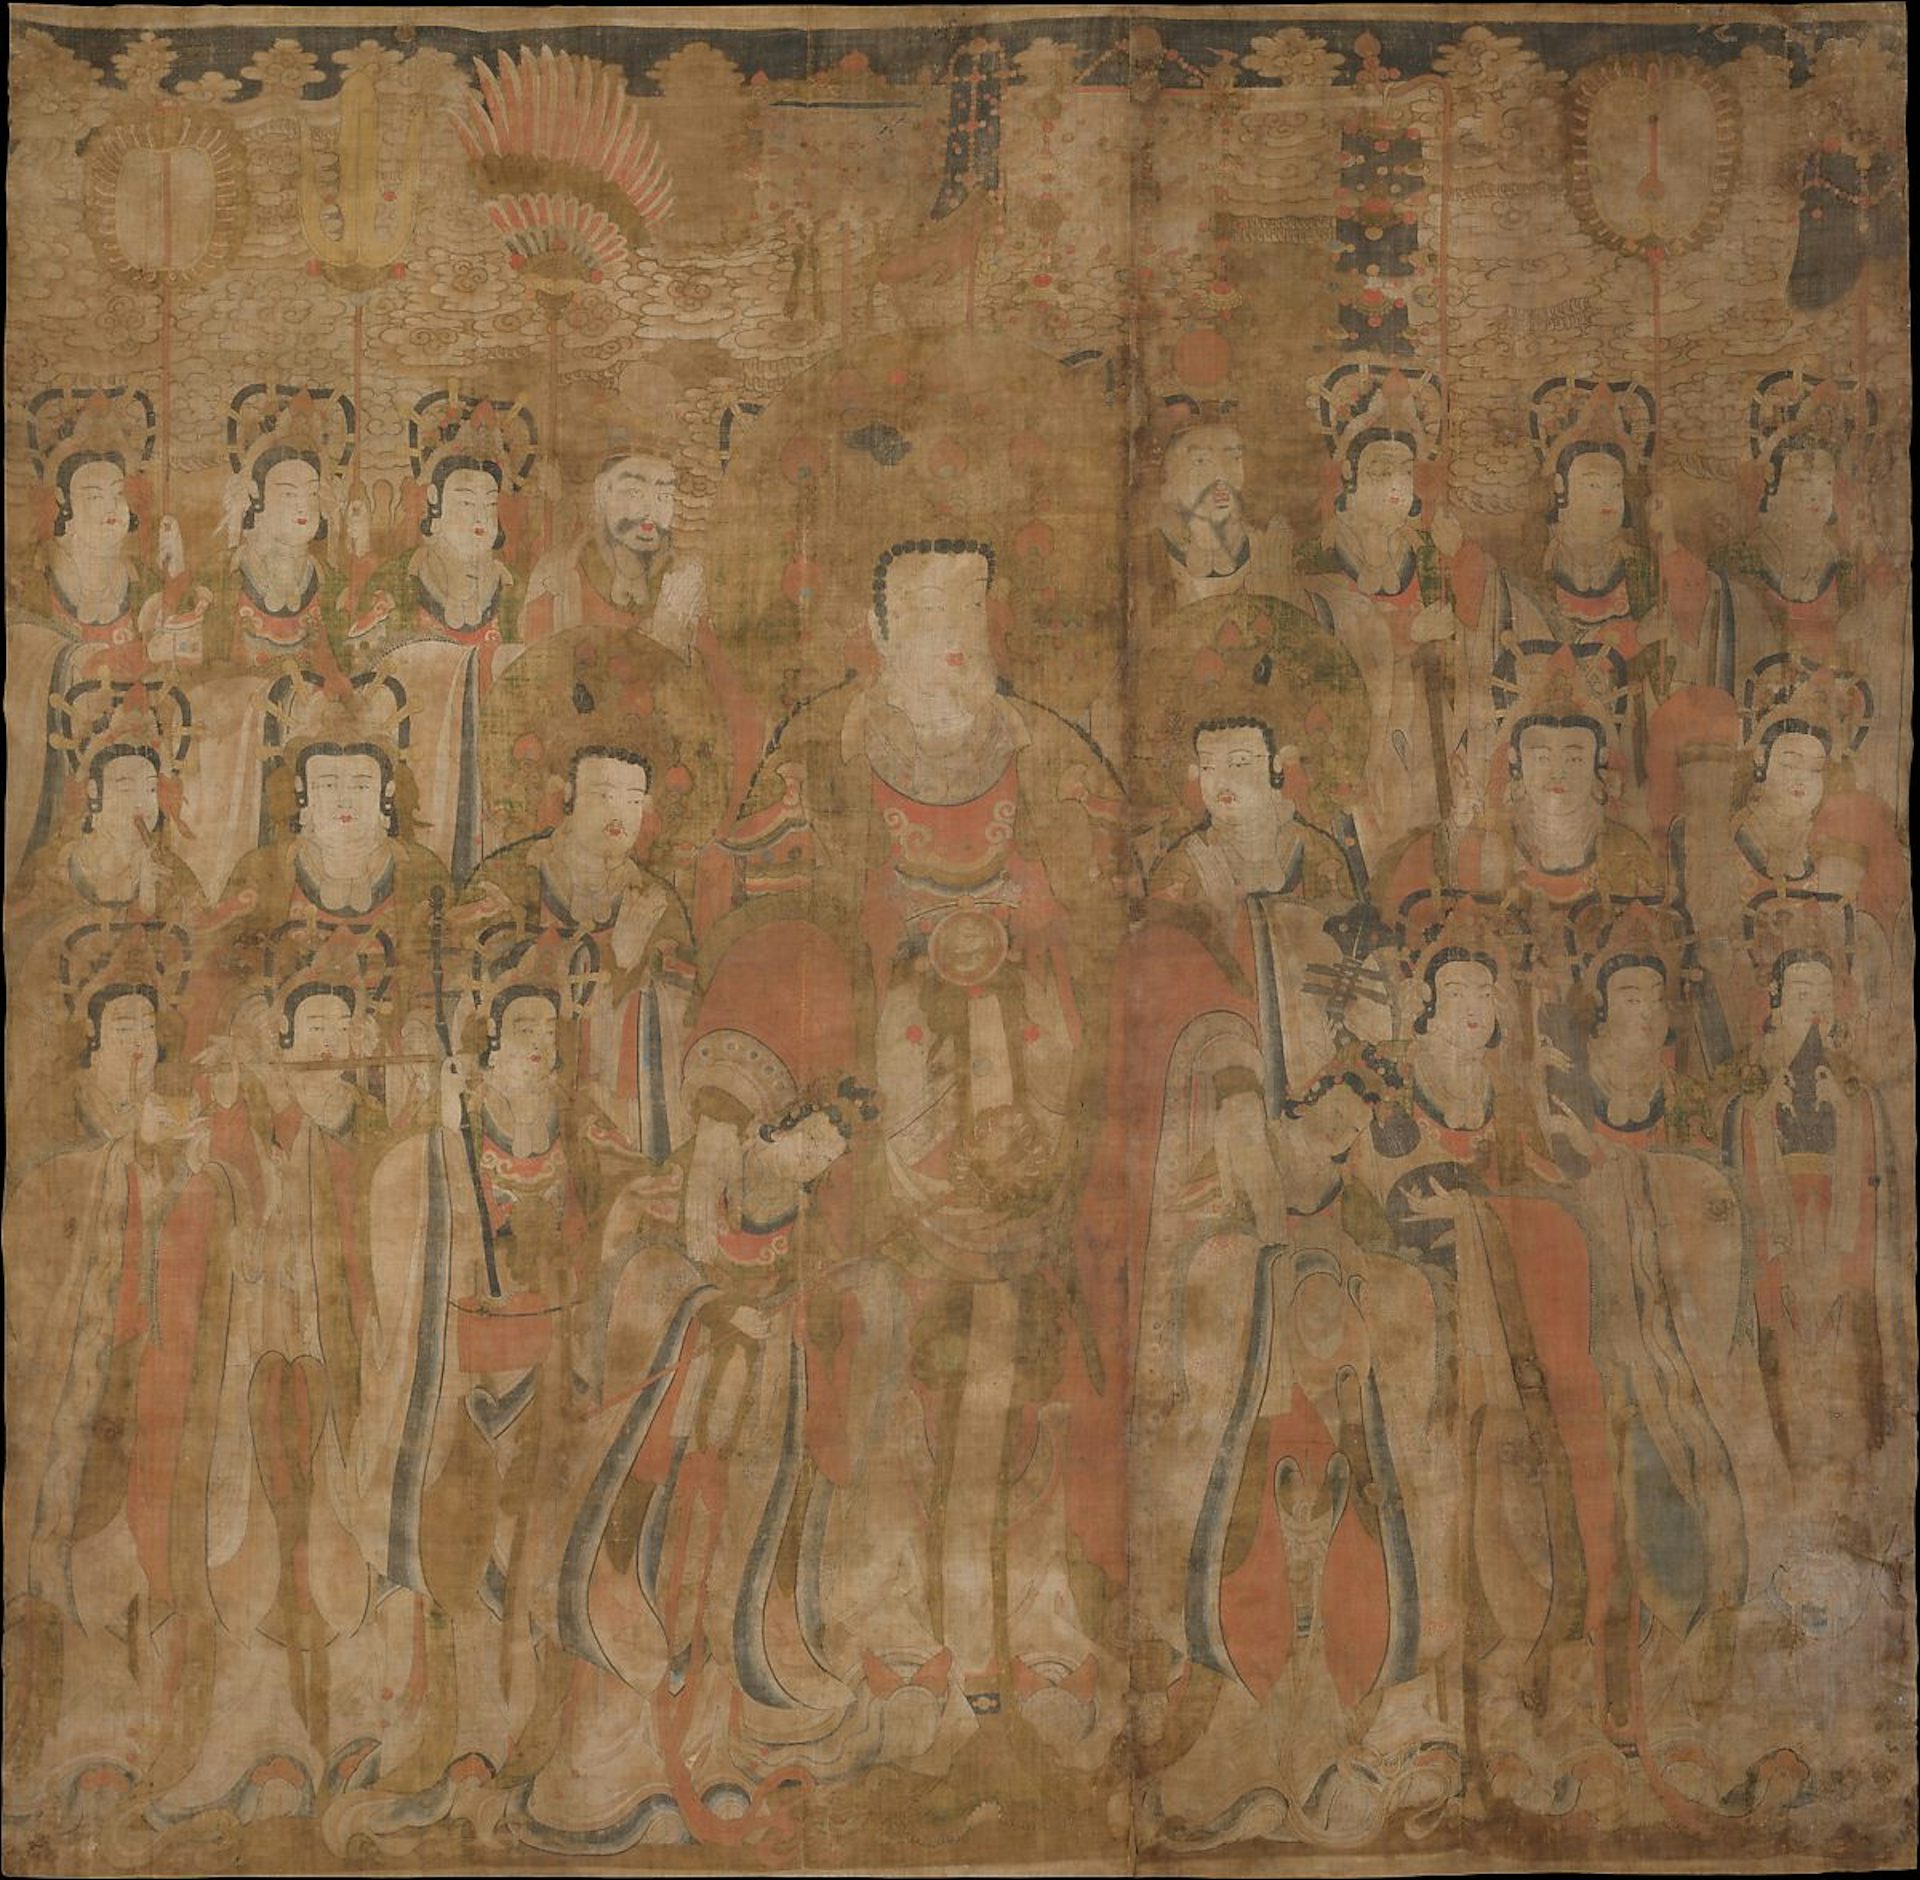 Brahma veya Beomcheon'un Kore tablosu, 16. yüzyılın sonları